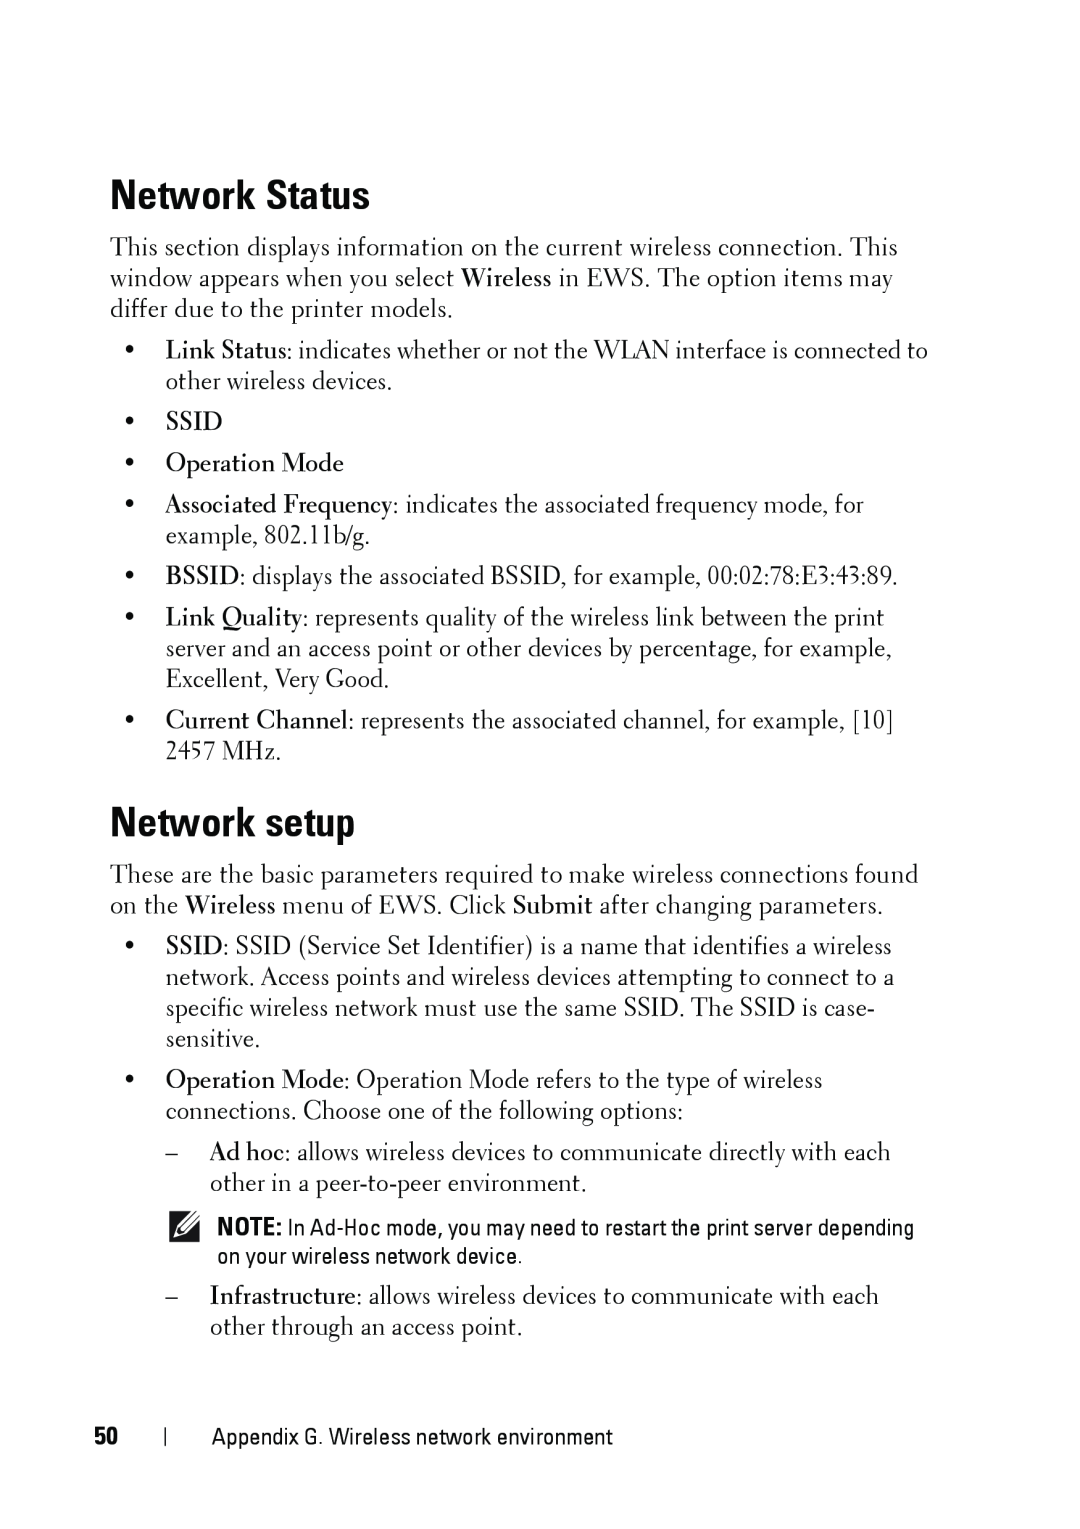 Dell 5002 manual Network Status, Network setup, SSID Operation Mode 